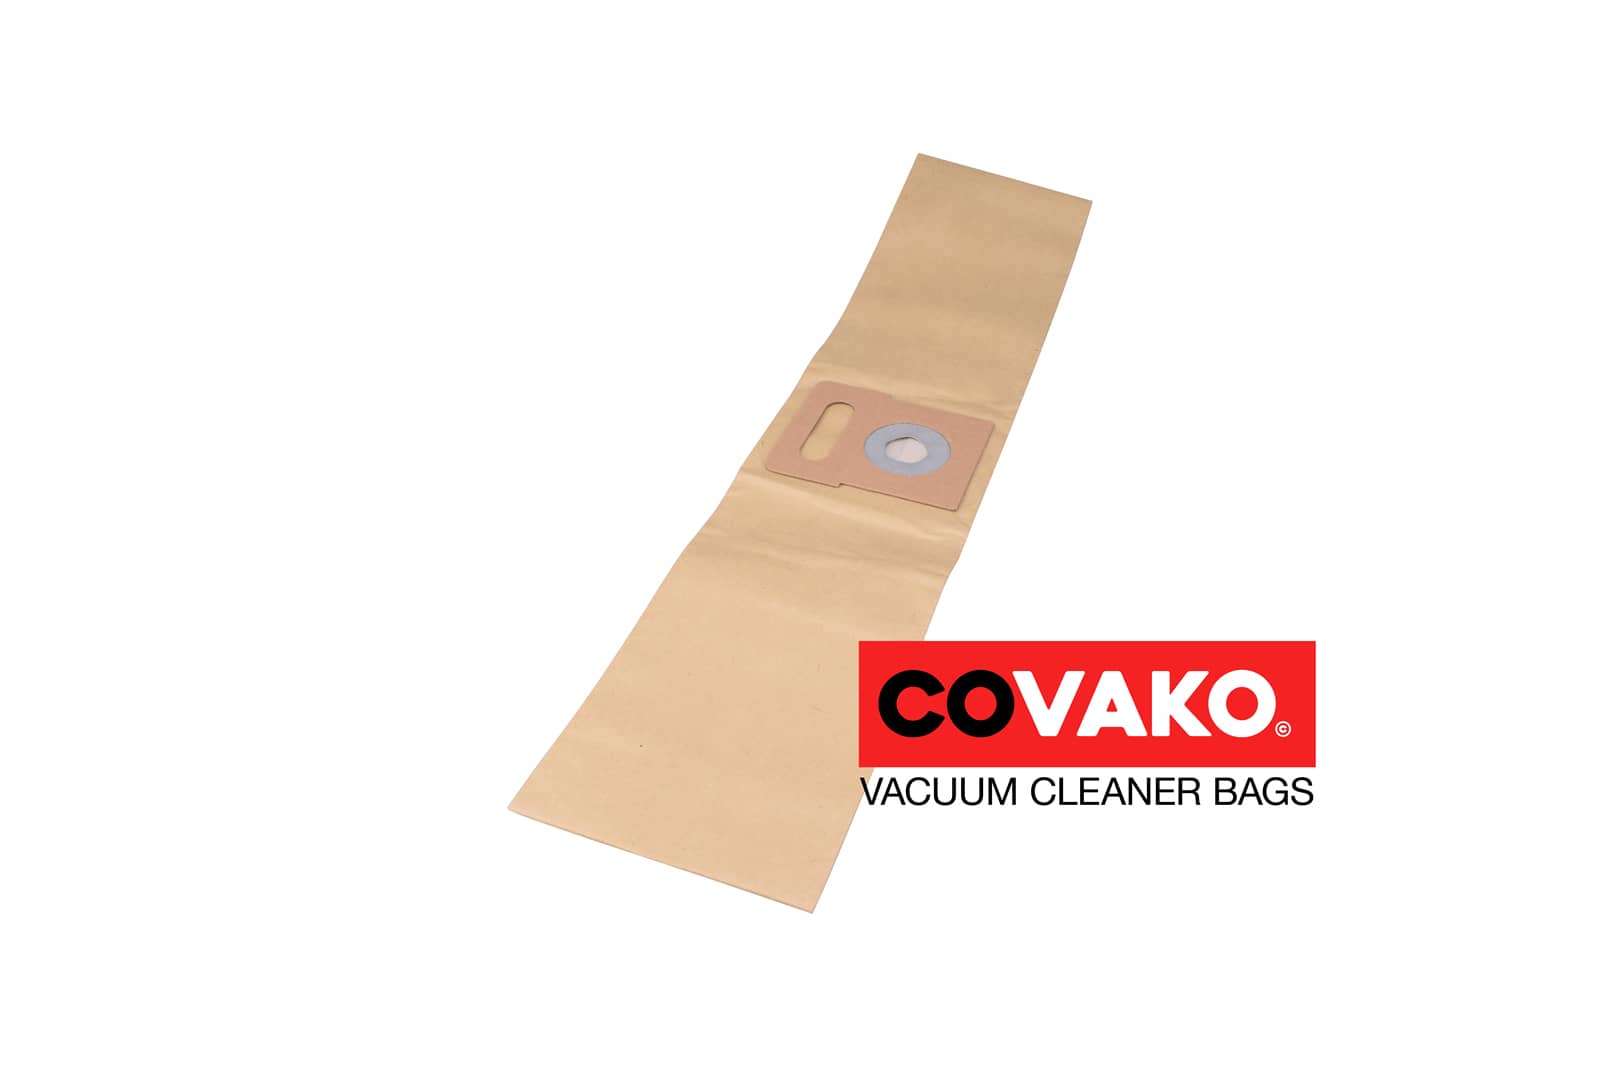 Clean a la Card Profi / Paper - Clean a la Card vacuum cleaner bags